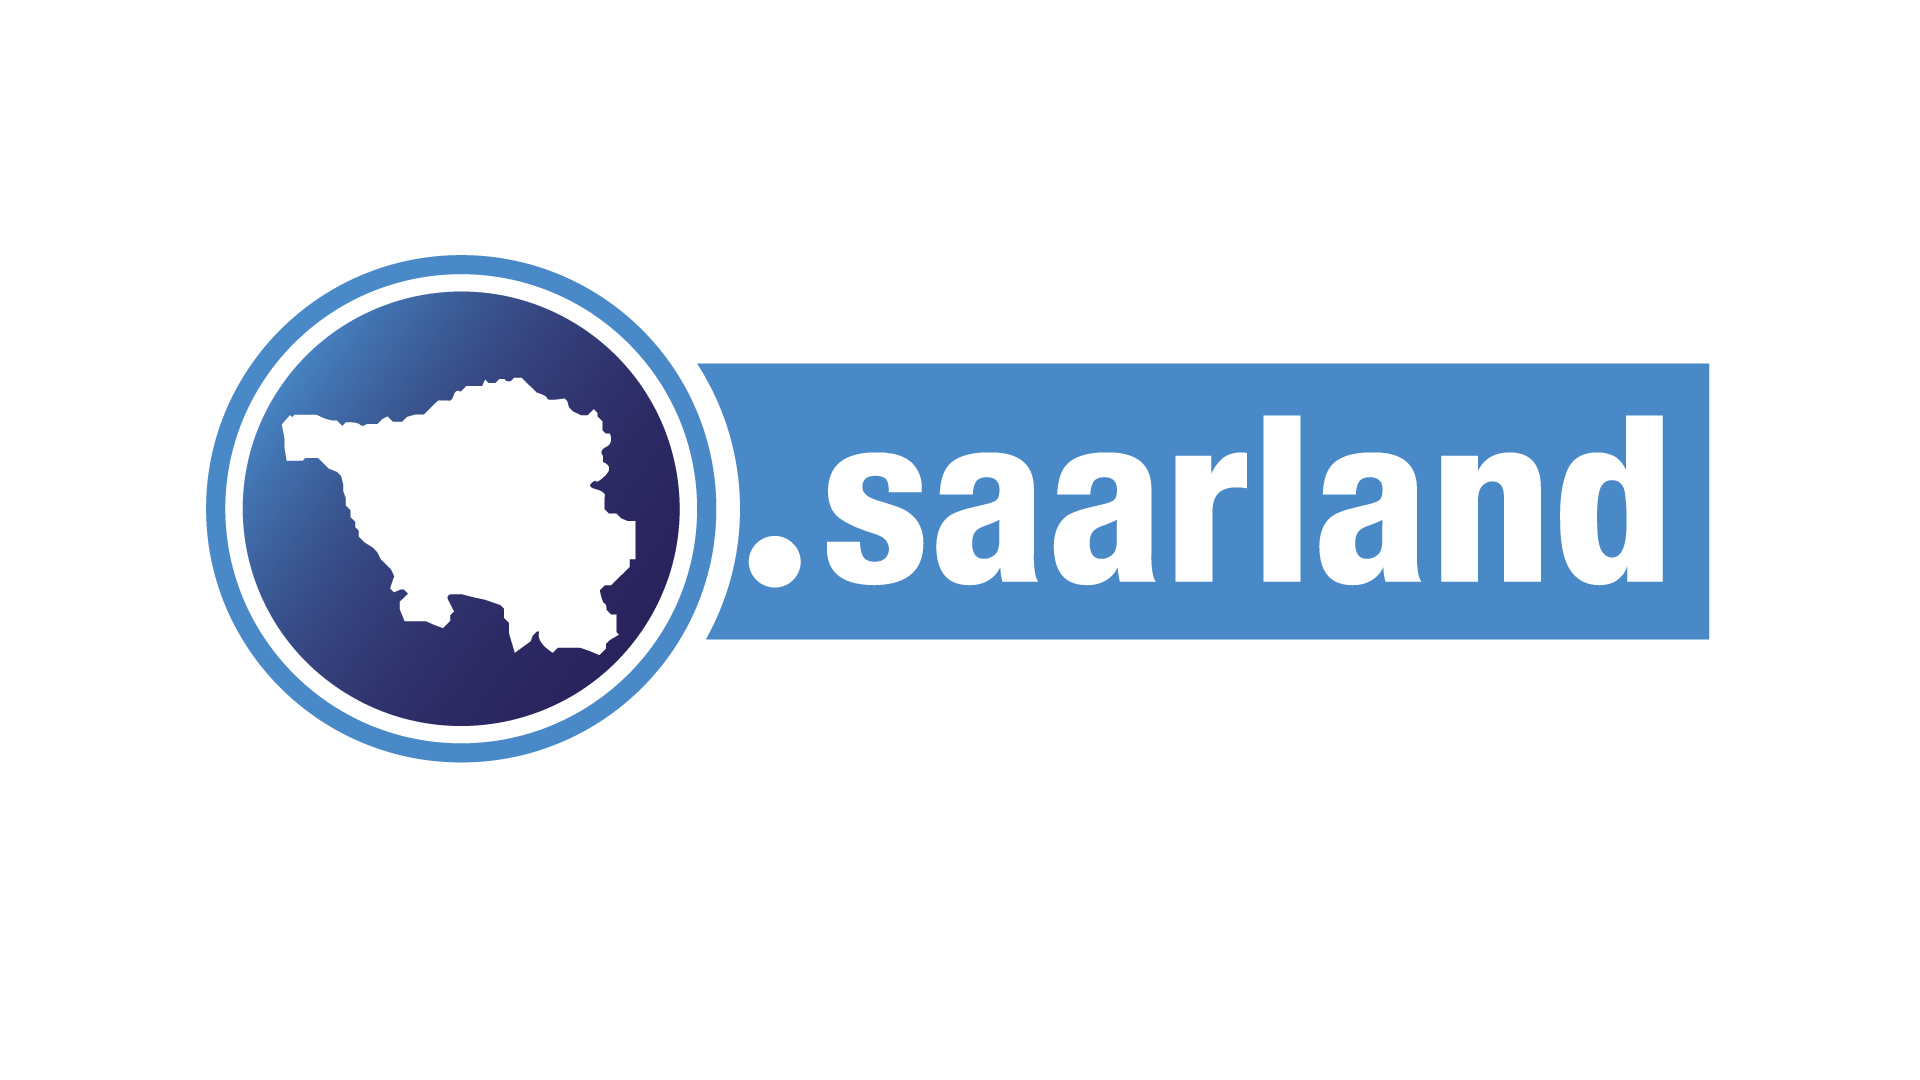 dot SAARLAND logo